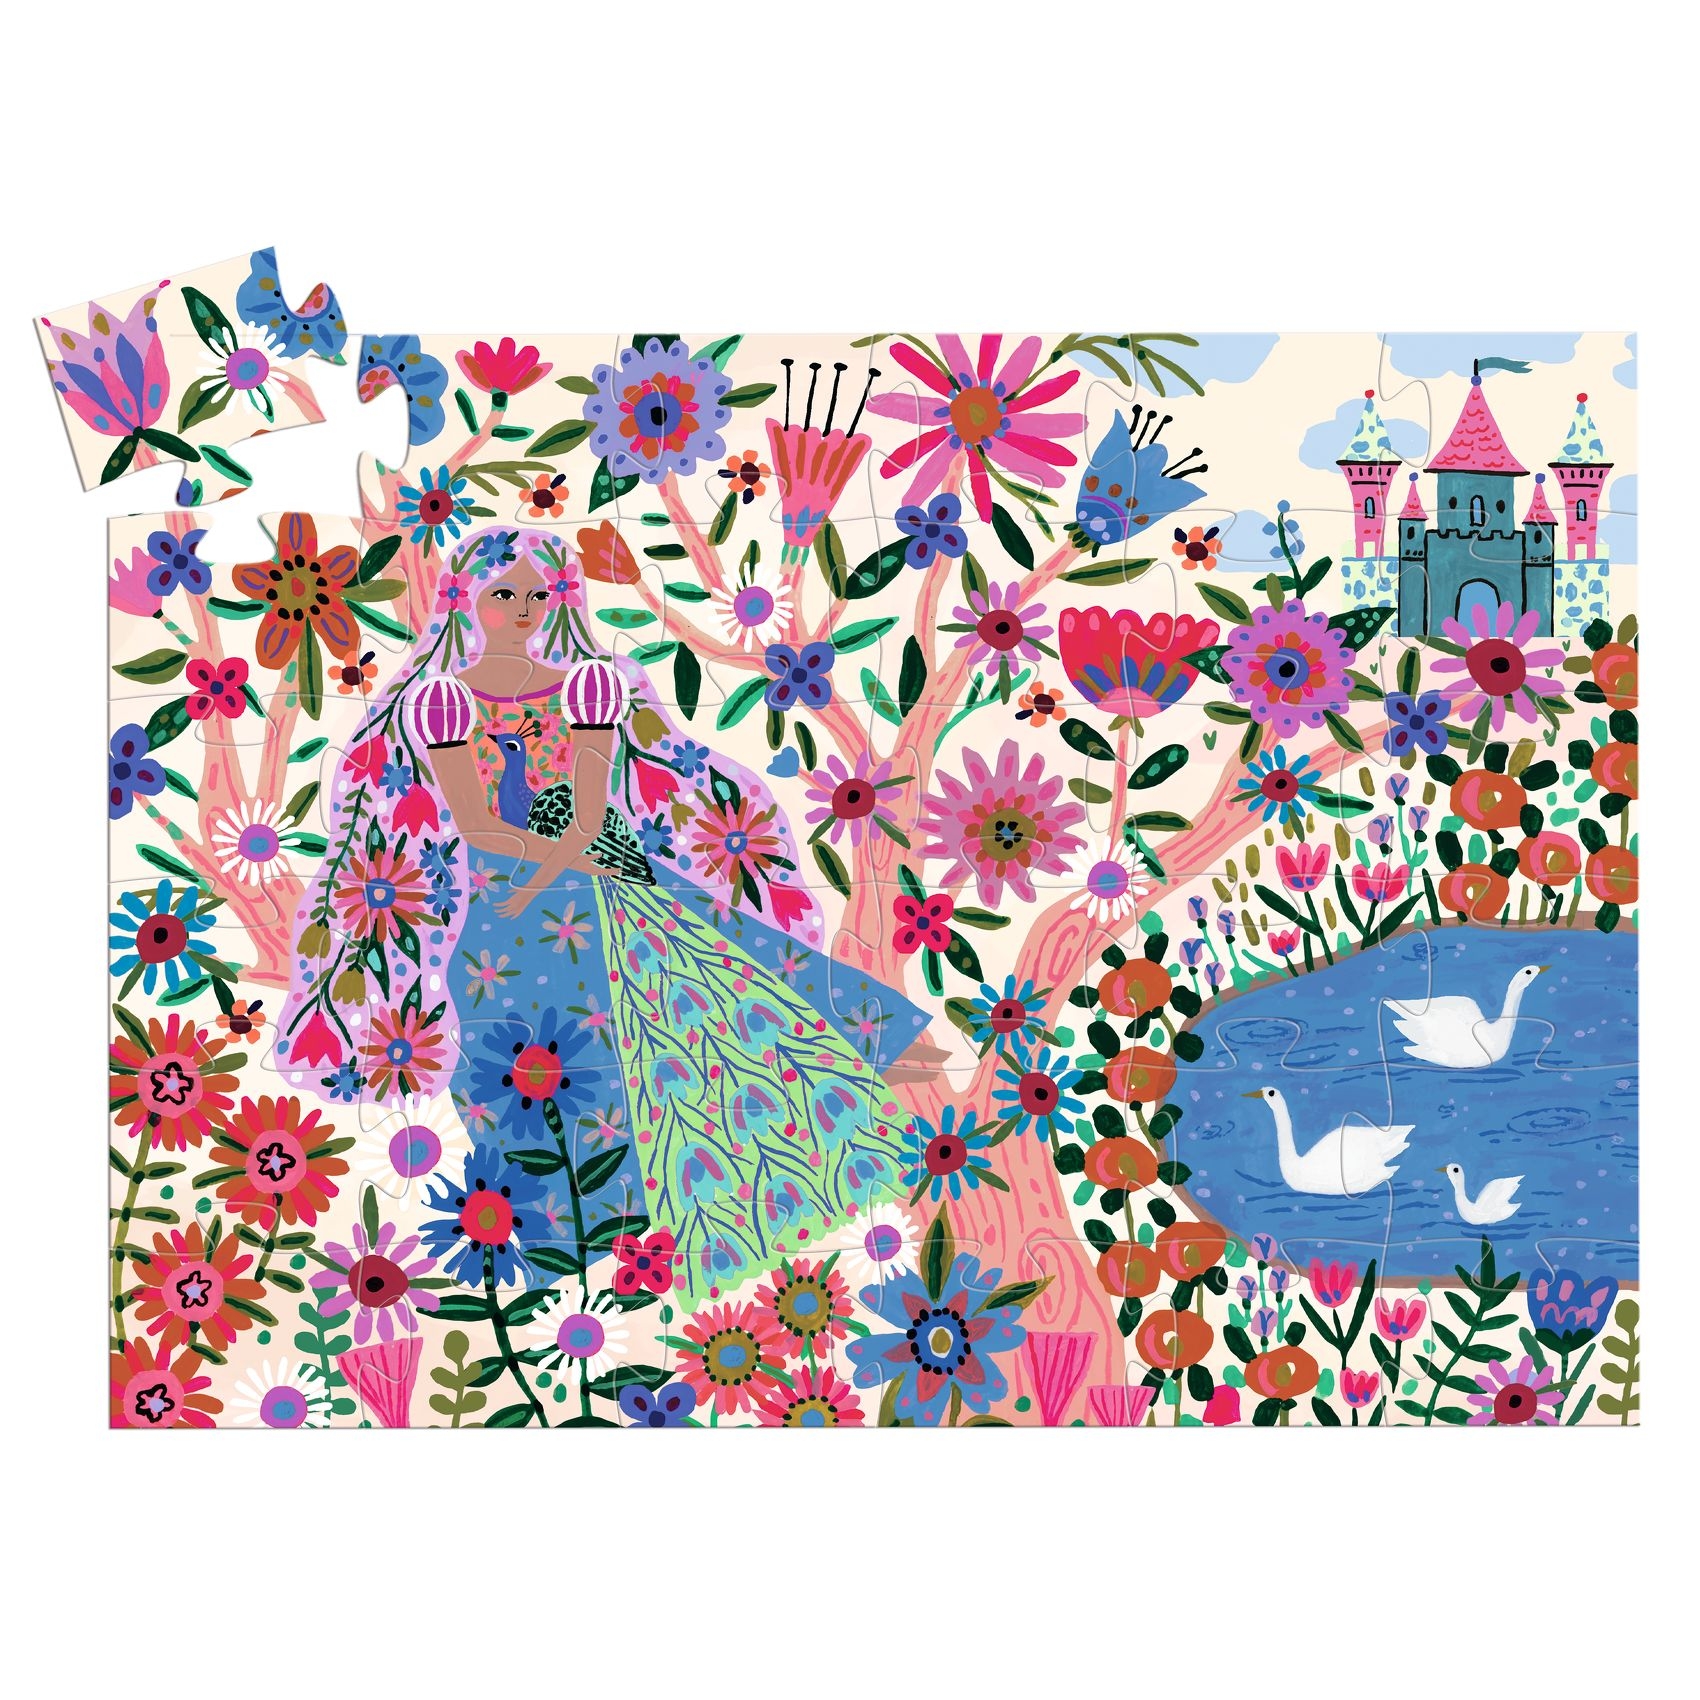 Formadobozos puzzle - Hercegnő és a páva, 36 db-os - The princess and her peacock  - 1